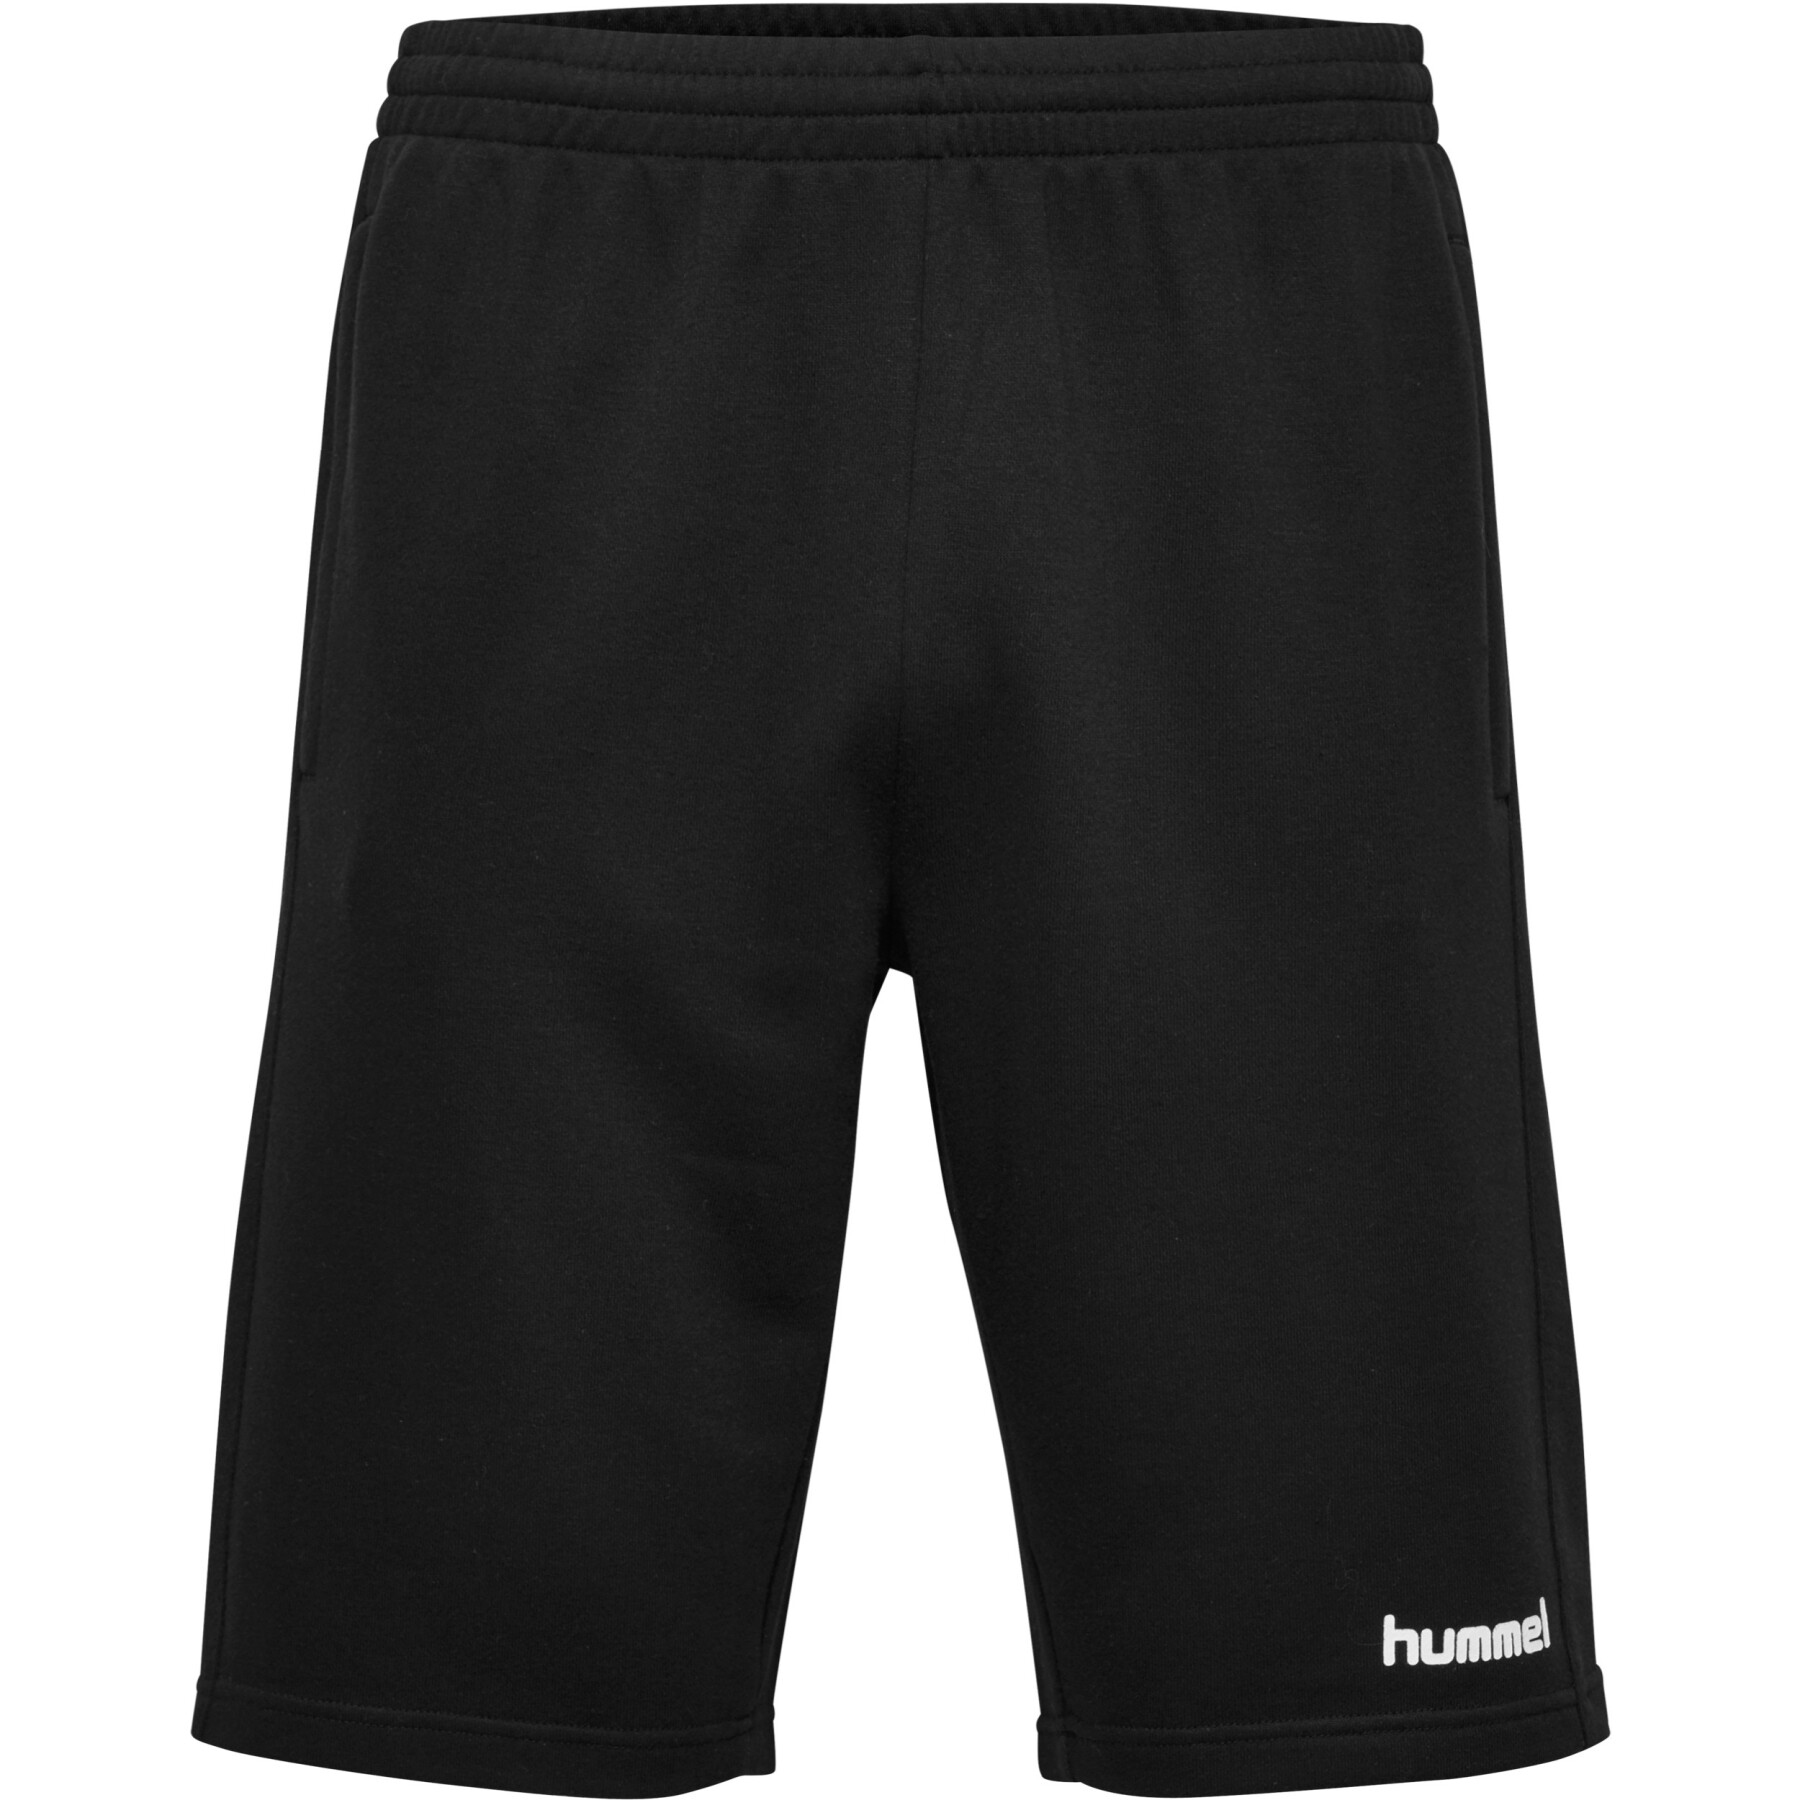 Children's shorts Hummel hmlGO cotton